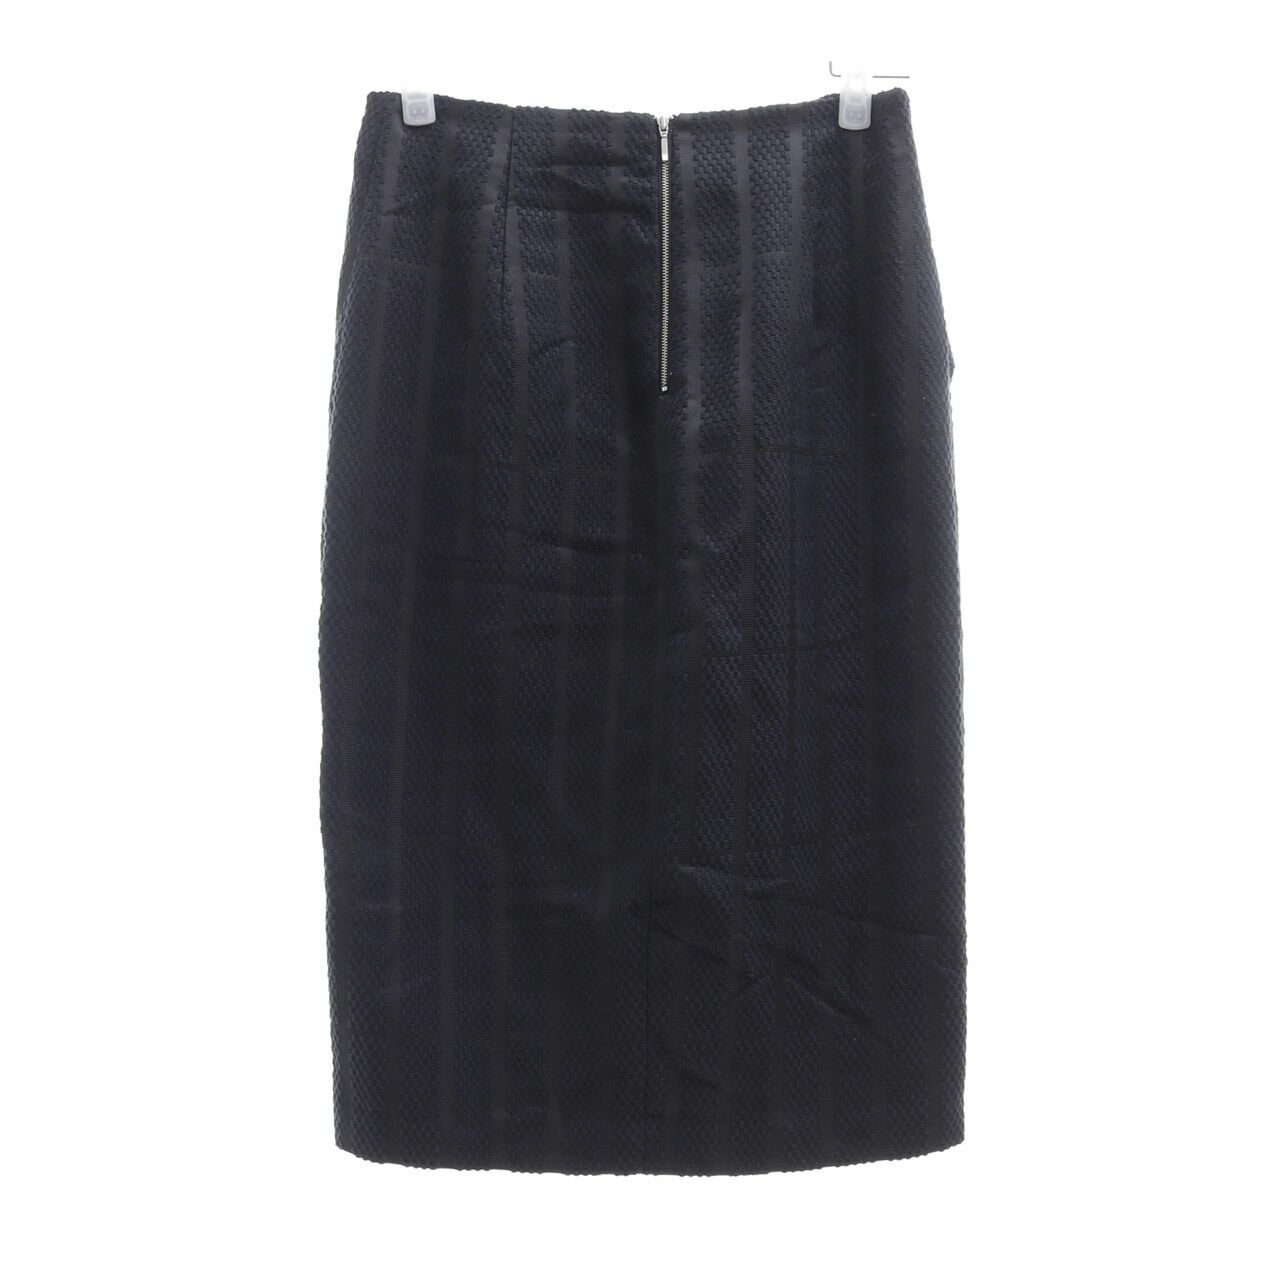 Finders Keepers Black Midi Skirt